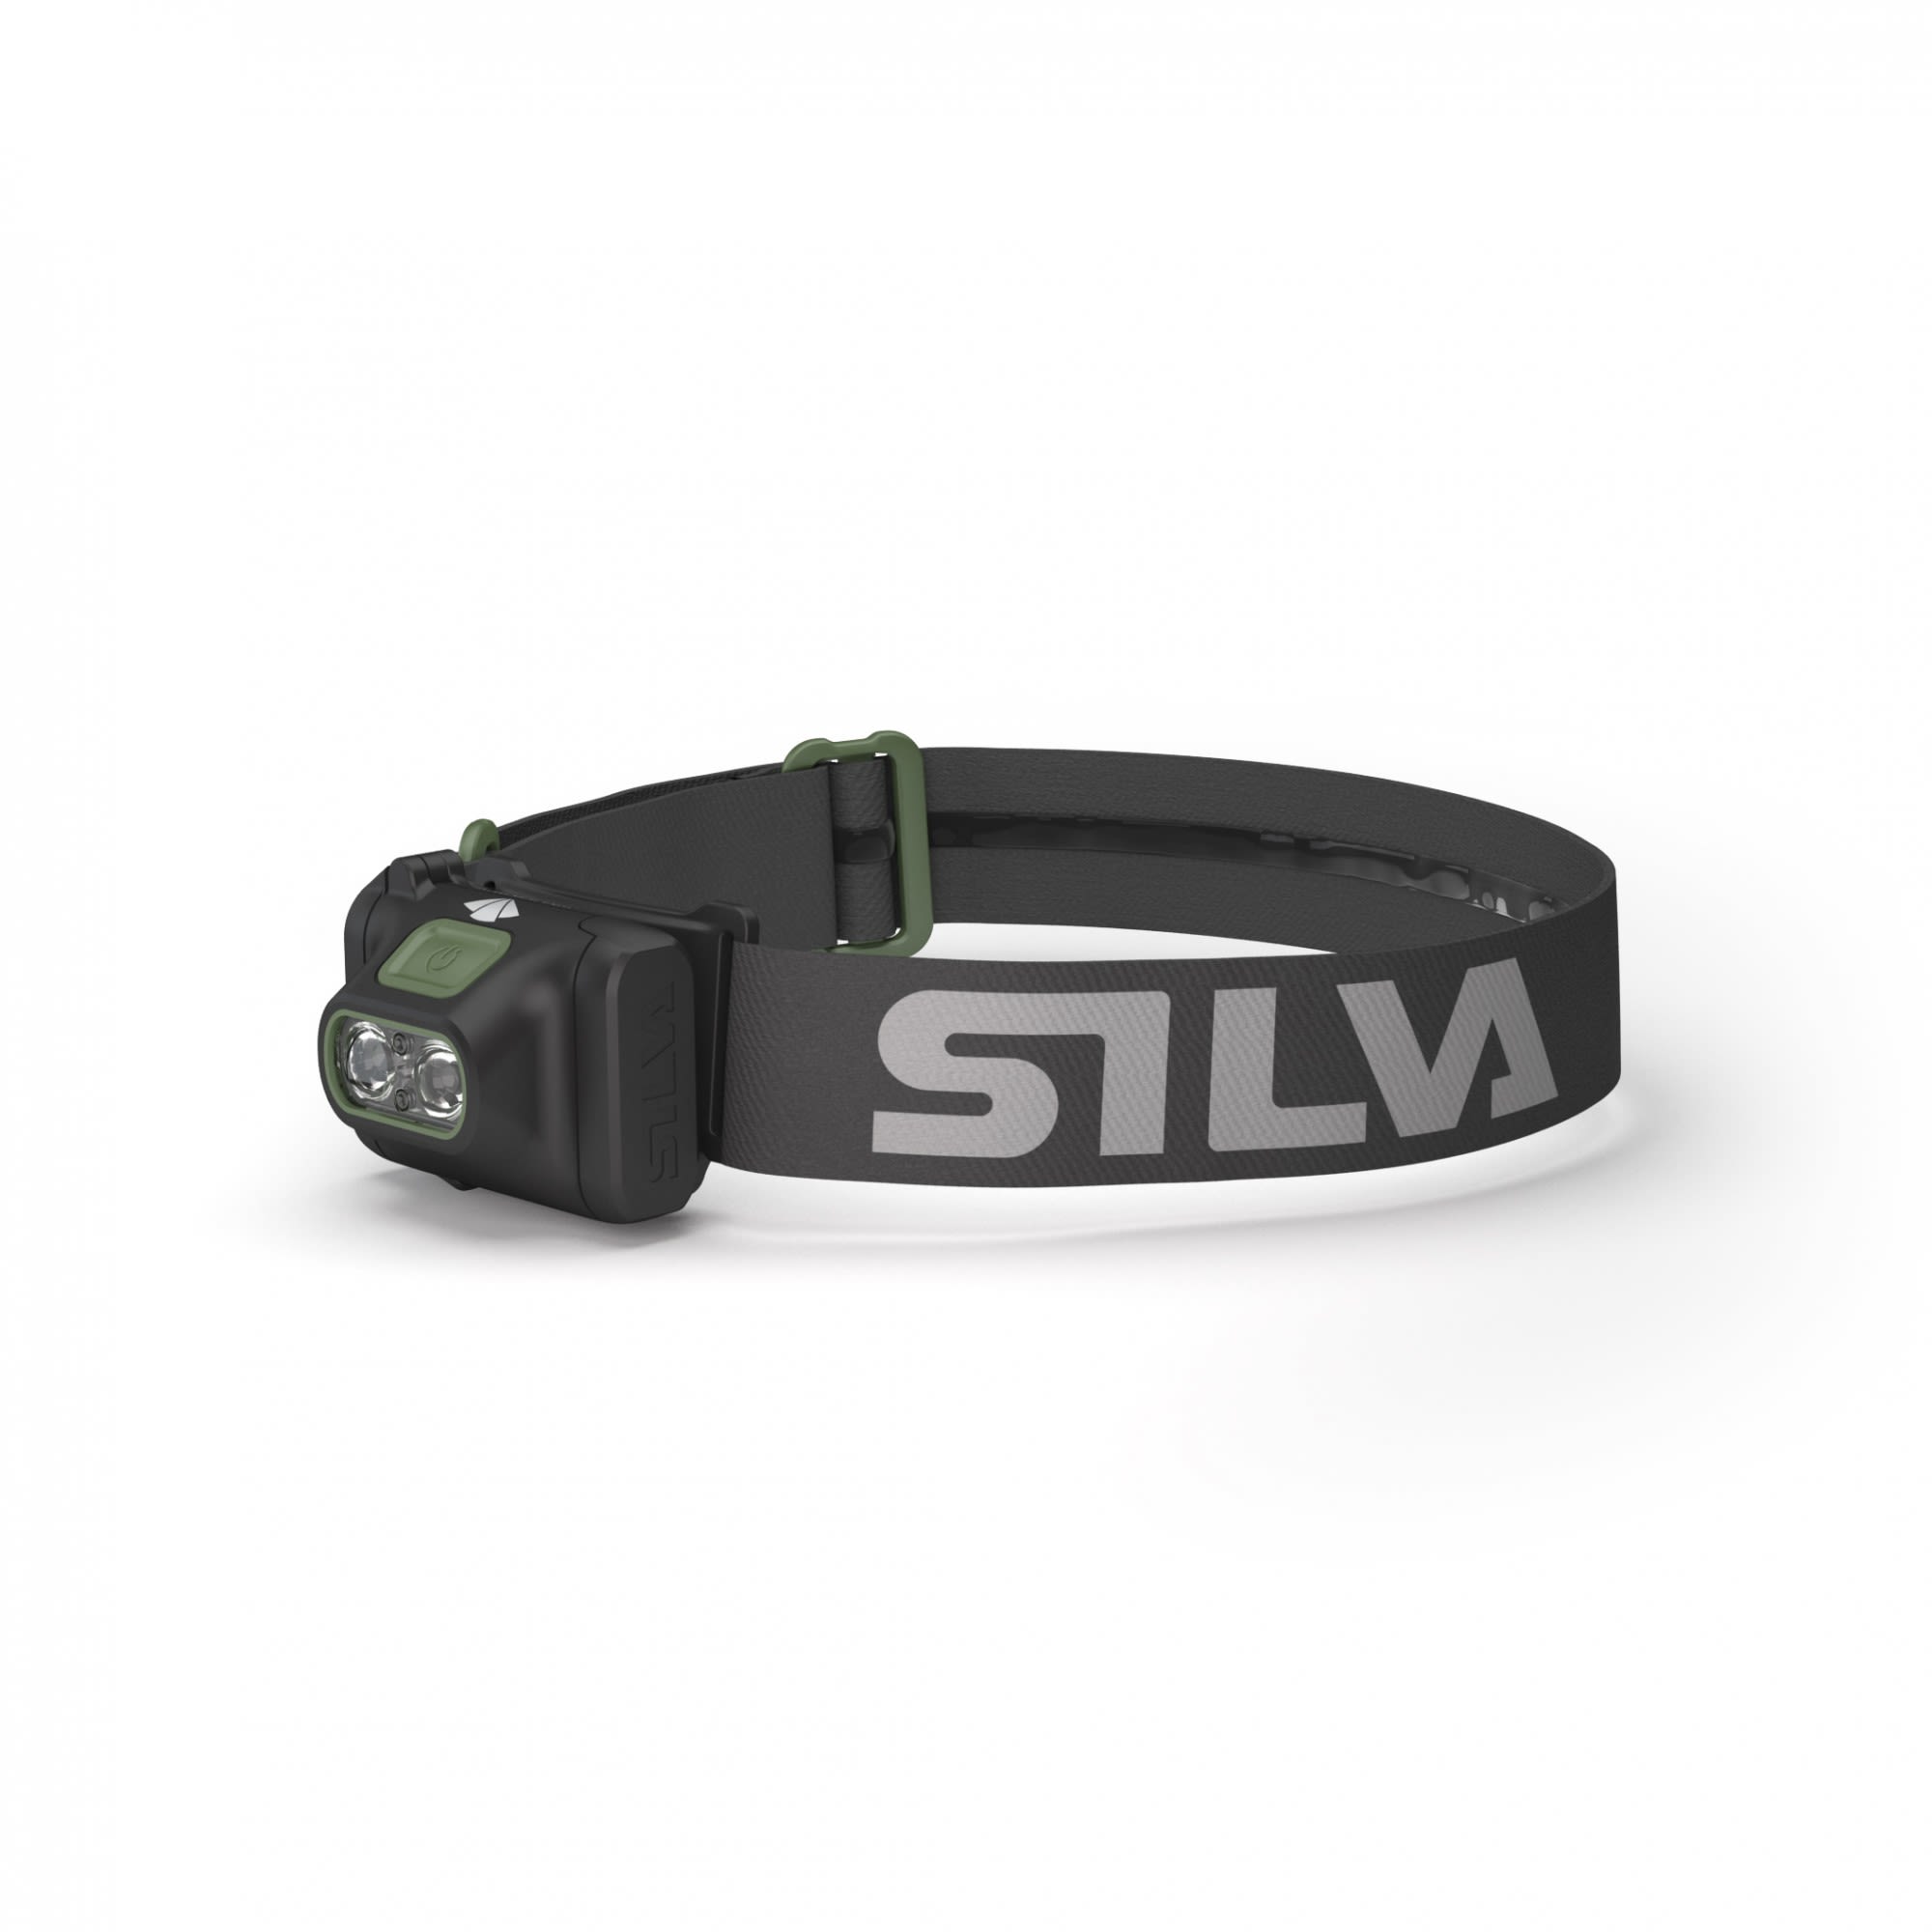 Silva Scout 3X Schwarz- Stirnlampen- Grsse One Size - Farbe Black - Green unter Silva